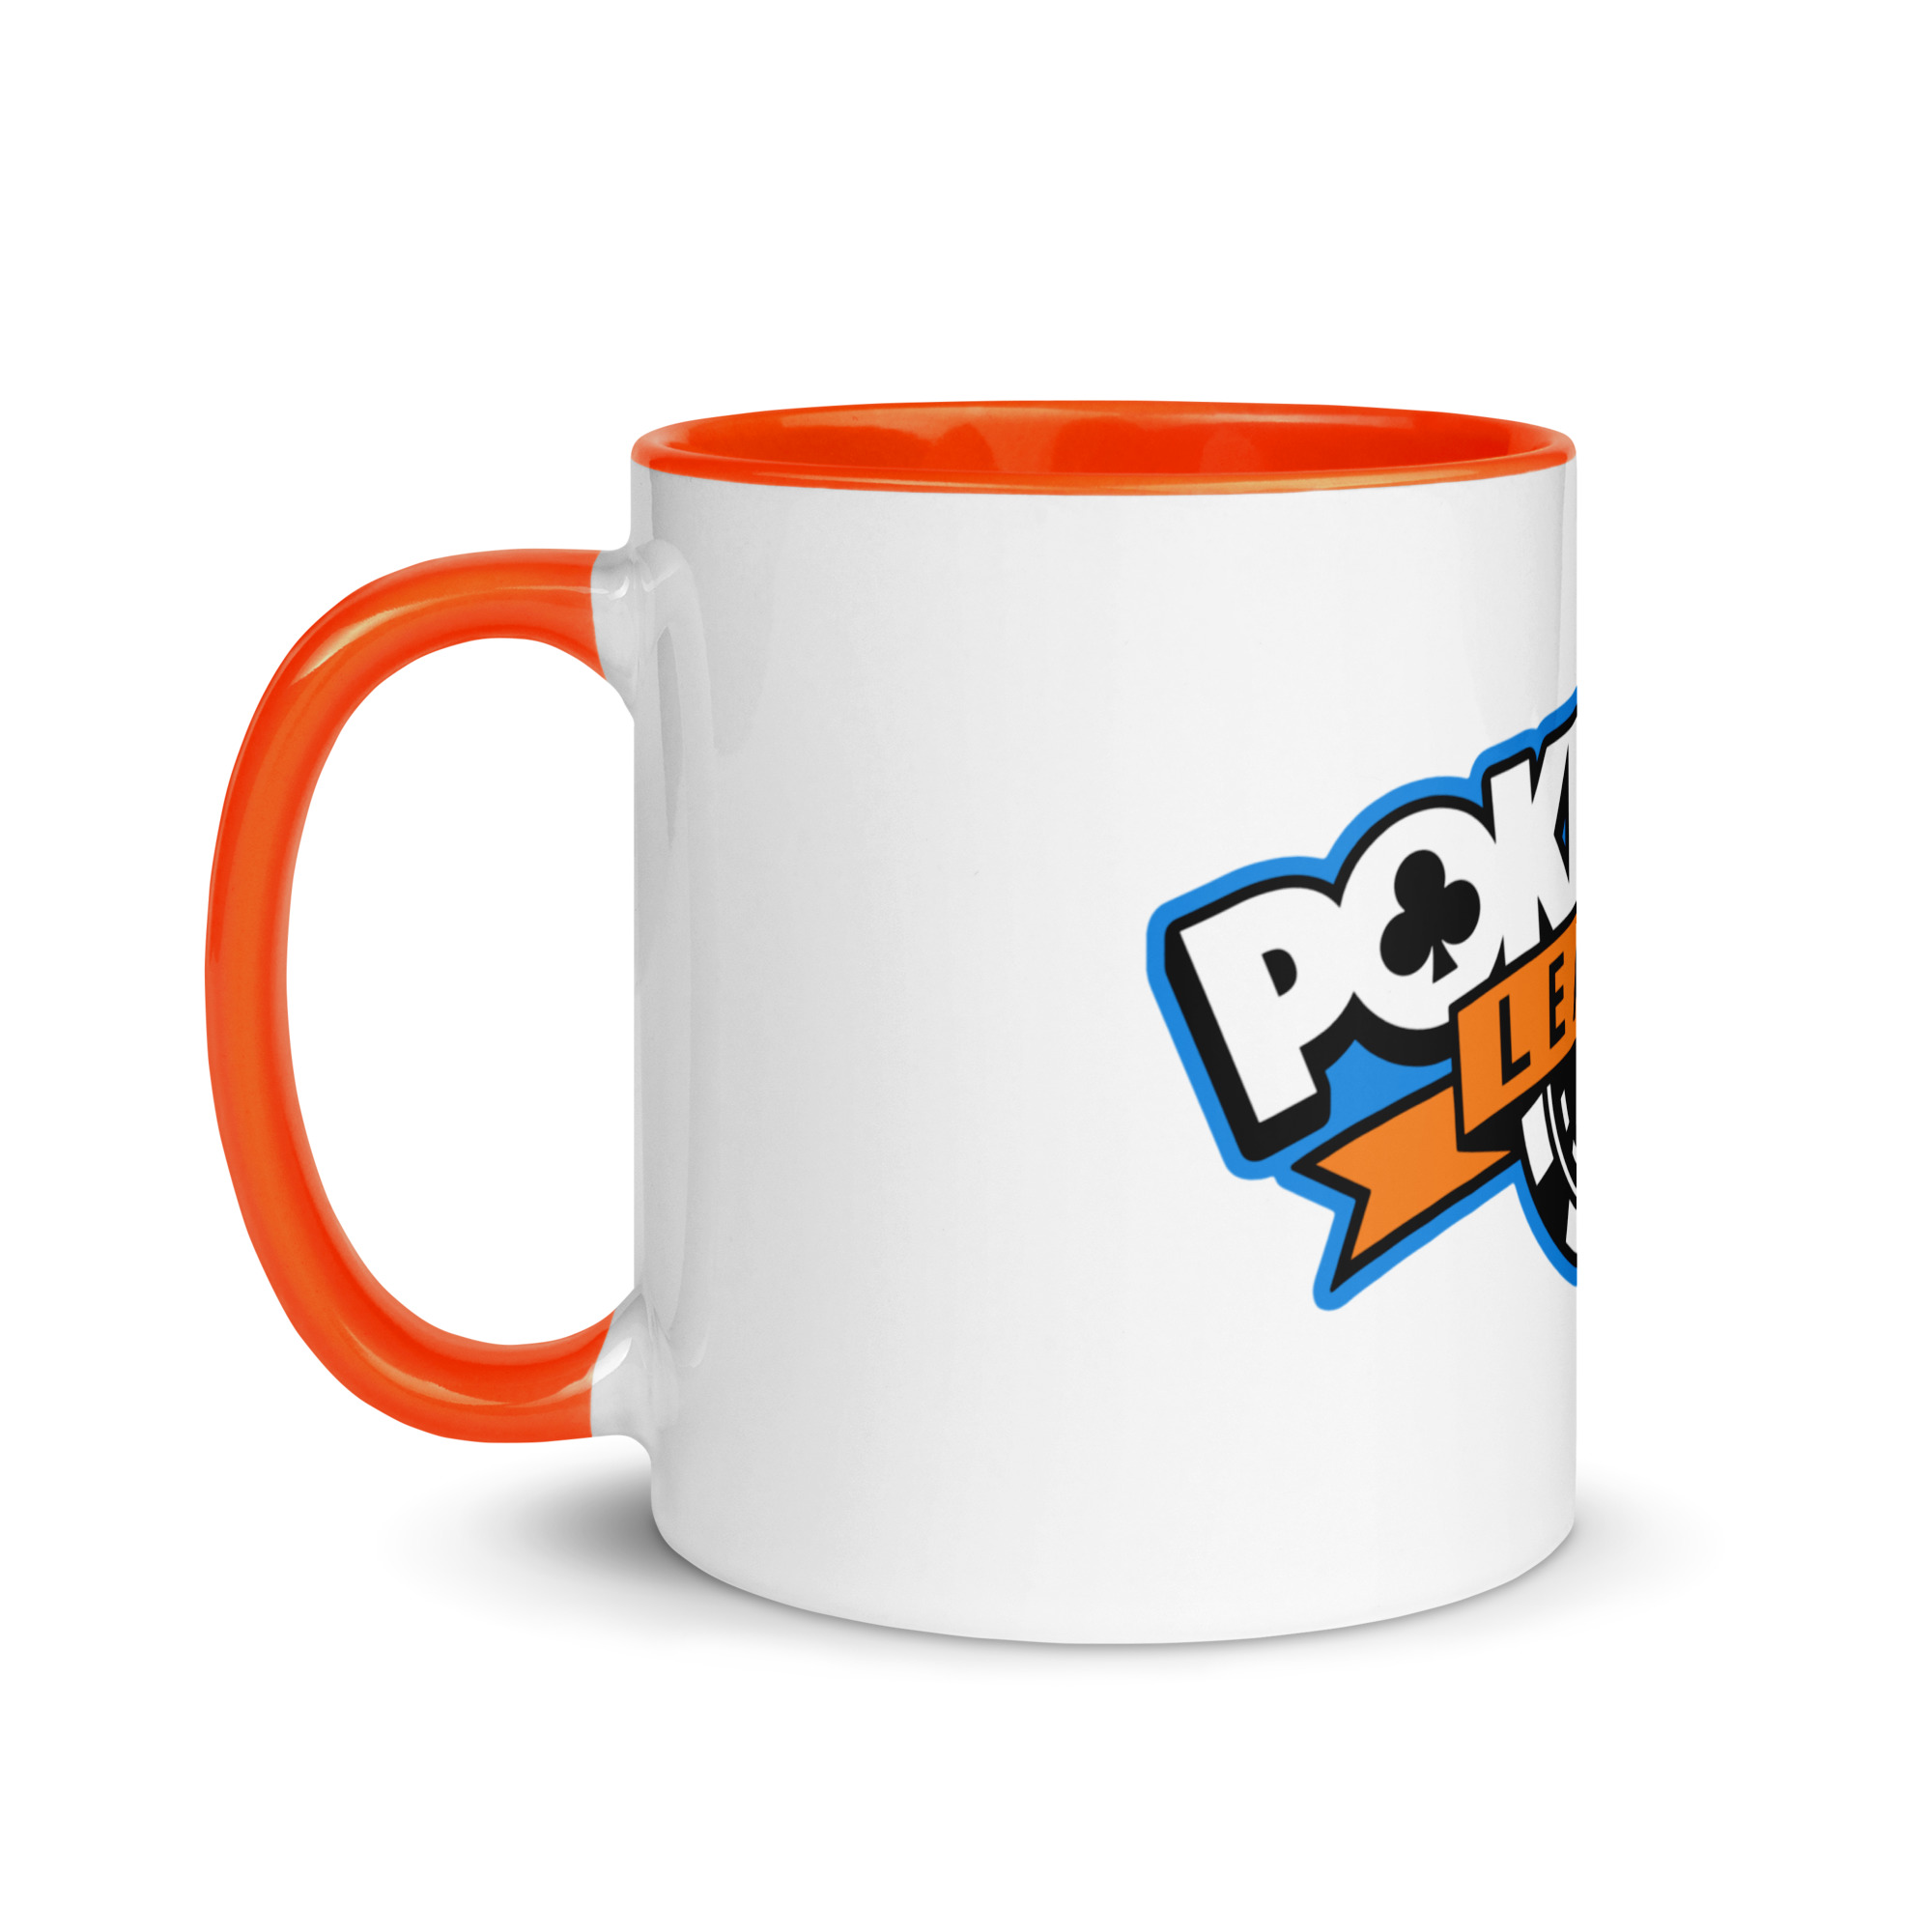 white-ceramic-mug-with-color-inside-orange-11-oz-left-654371f12308d.jpg